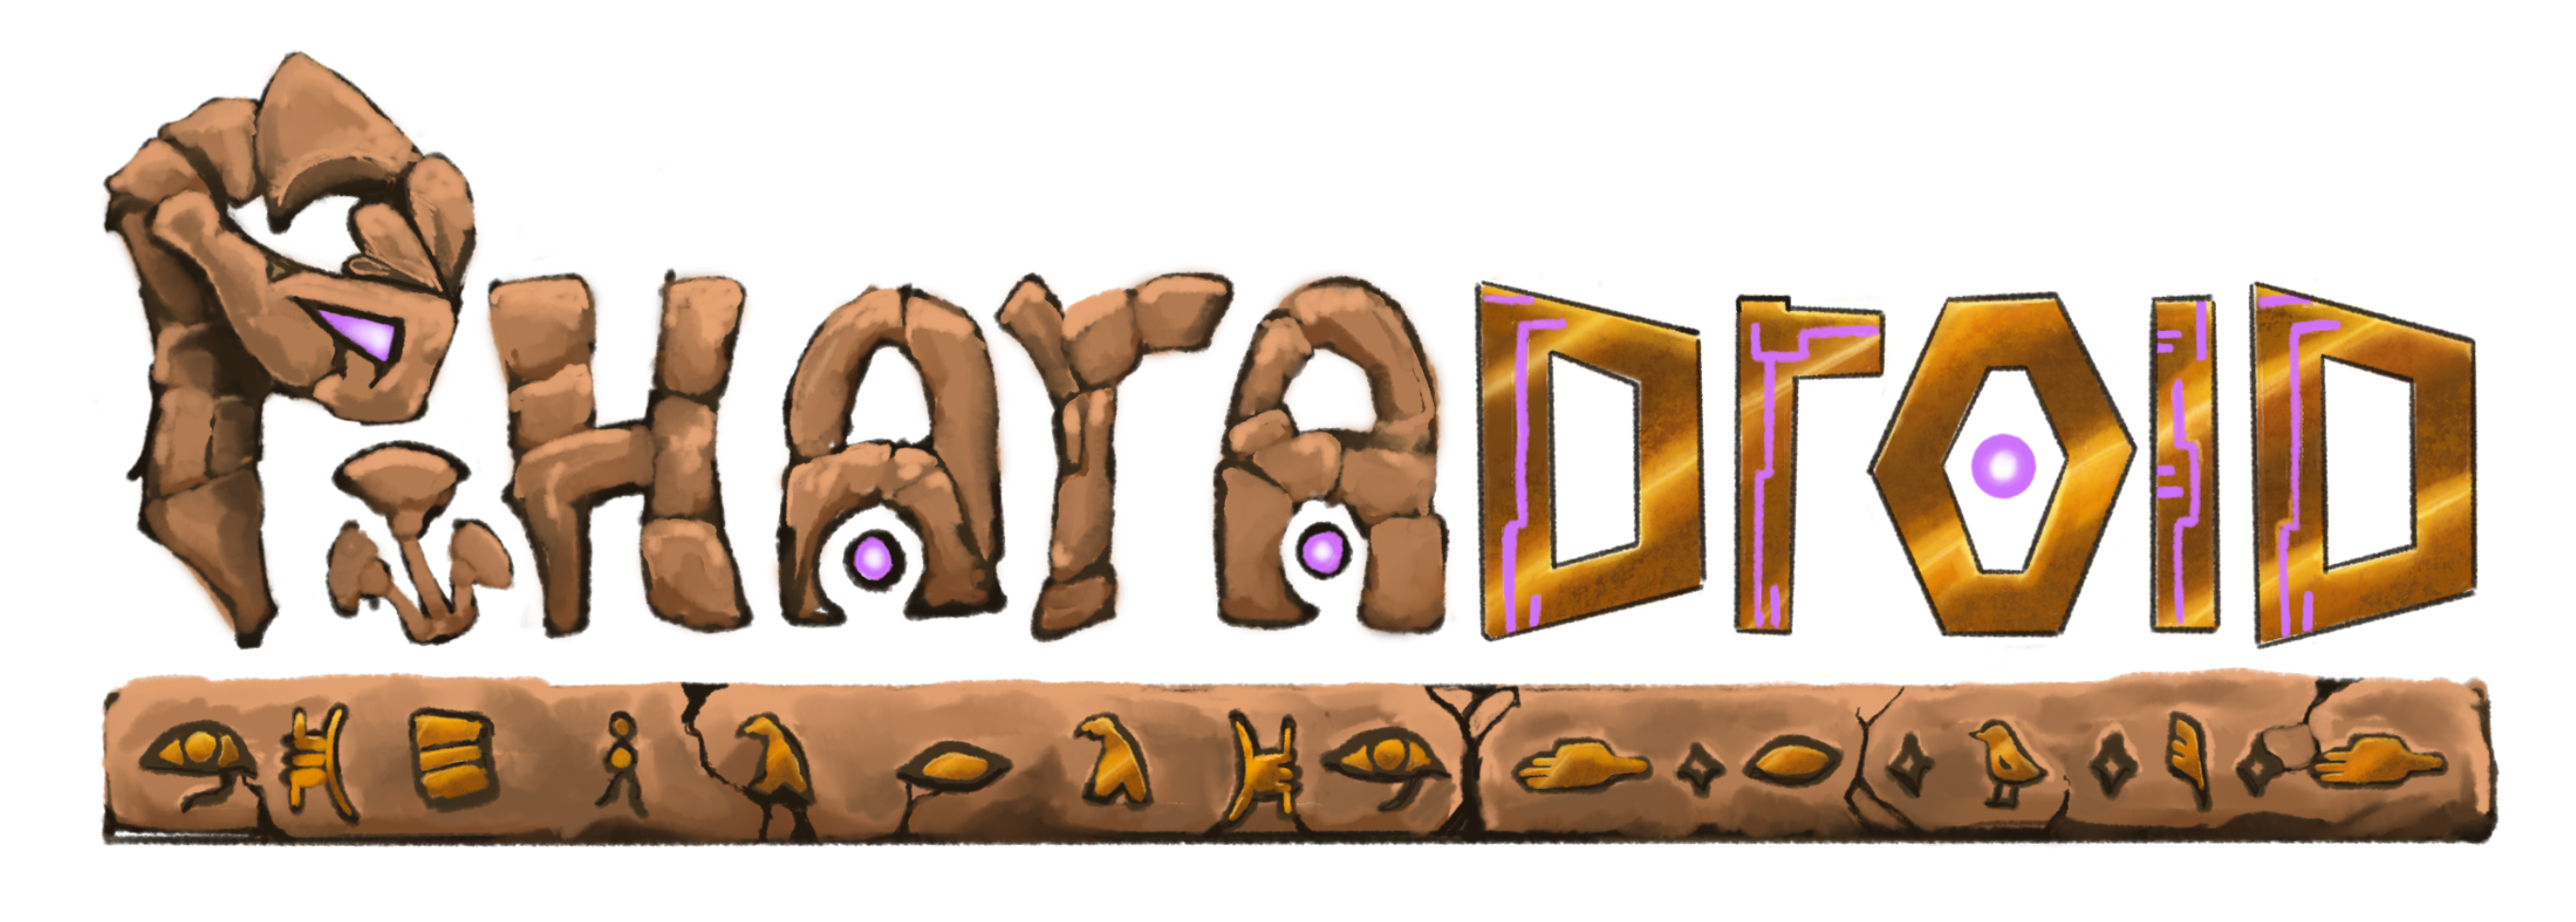 PharaDroid - Team 9 - 21/22 Y1D